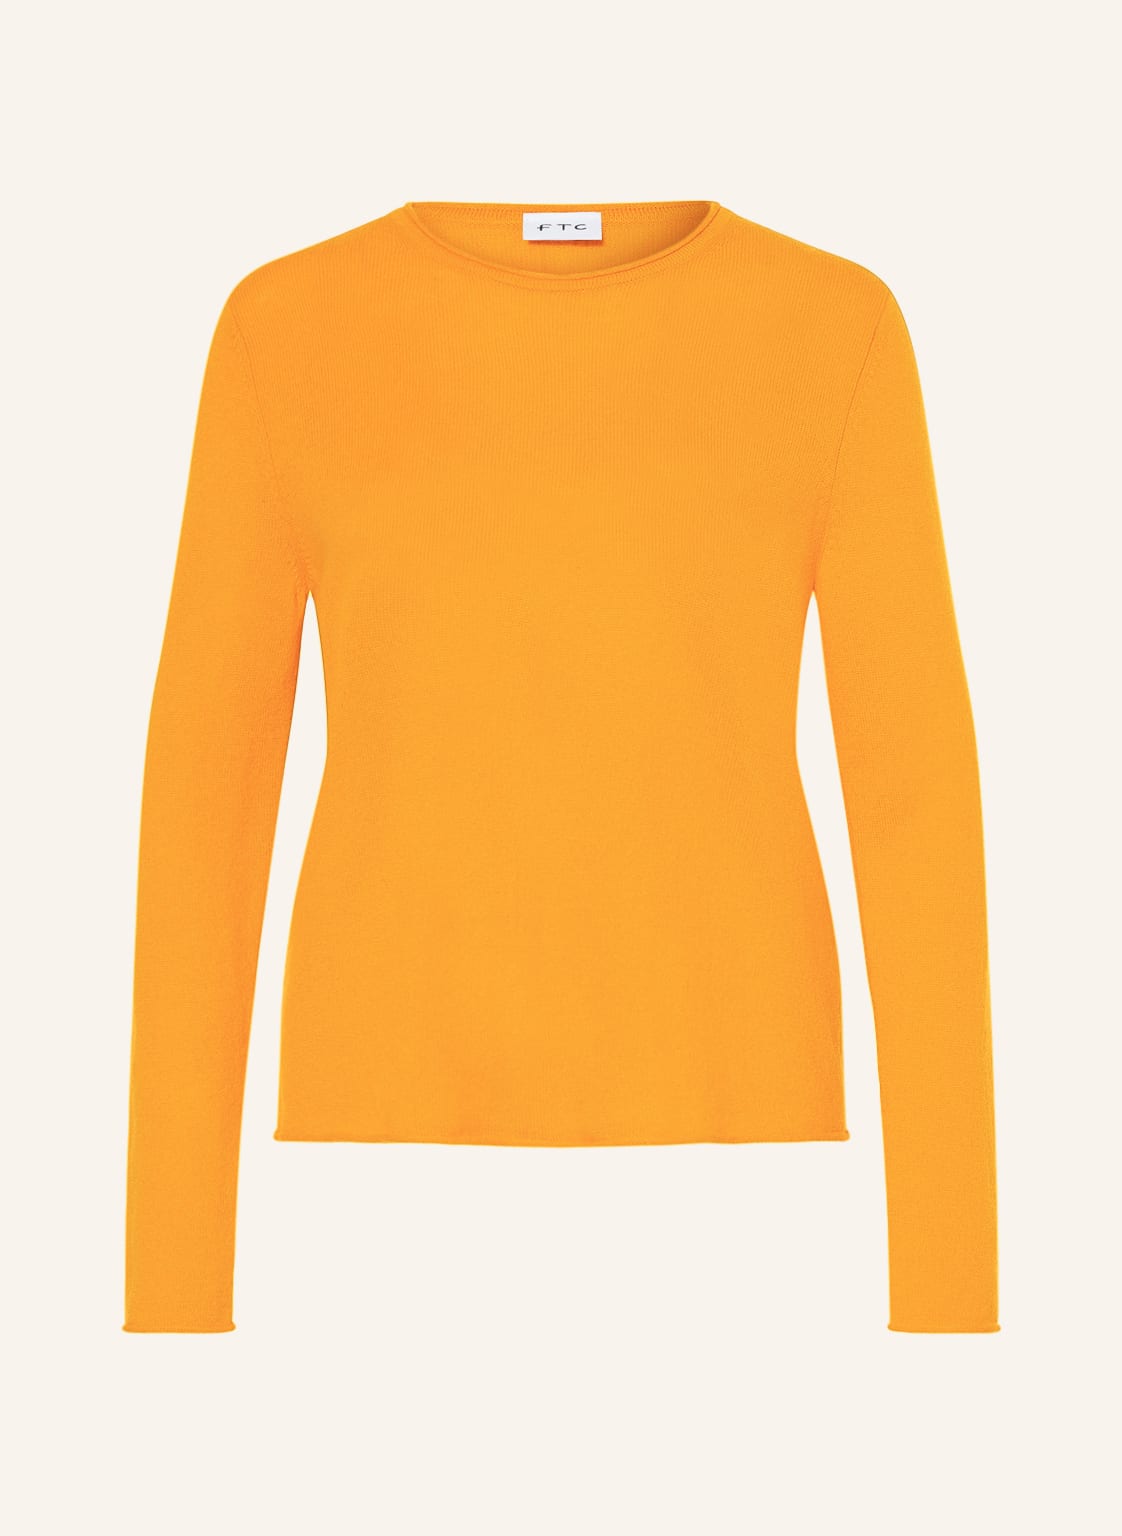 Image of Ftc Cashmere Cashmere-Pullover orange